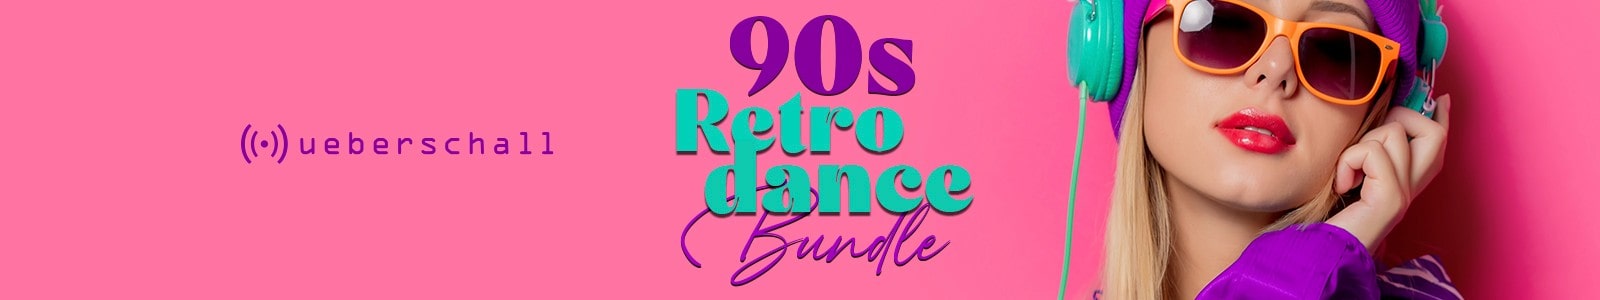 90s Retro Dance Bundle by UEBERSCHALL